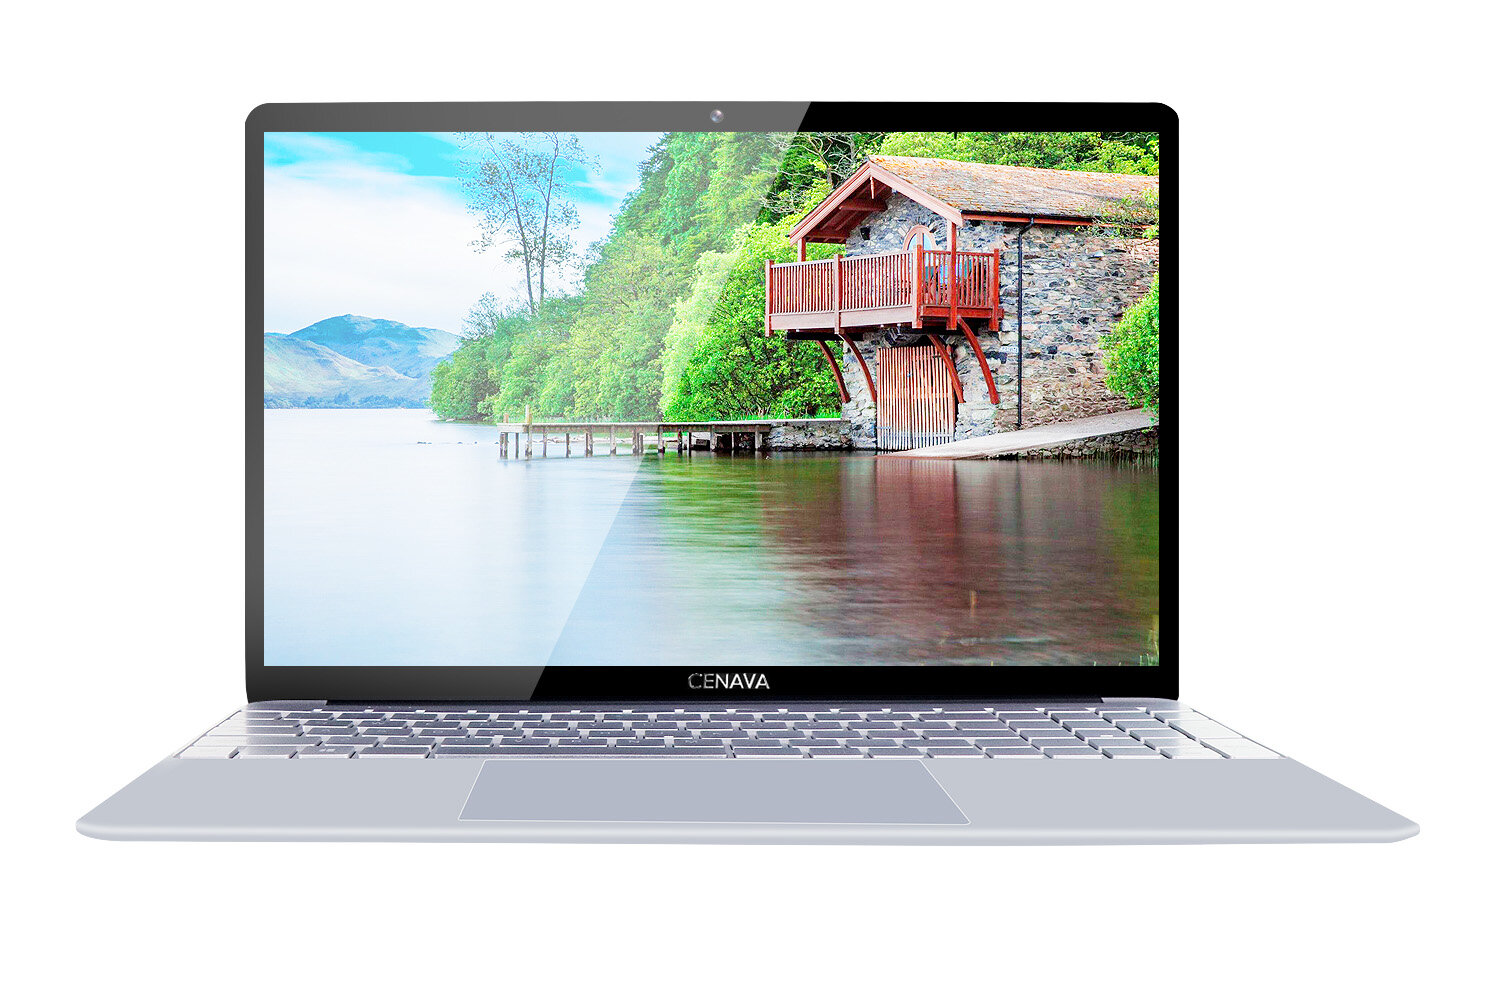 CENAVA F151 Laptop 15.6 inch Intel Core J3355 Intel HD Graphics 500 Win10 6G RAM 512GB SSD Notebook TN Screen － Rose Gold